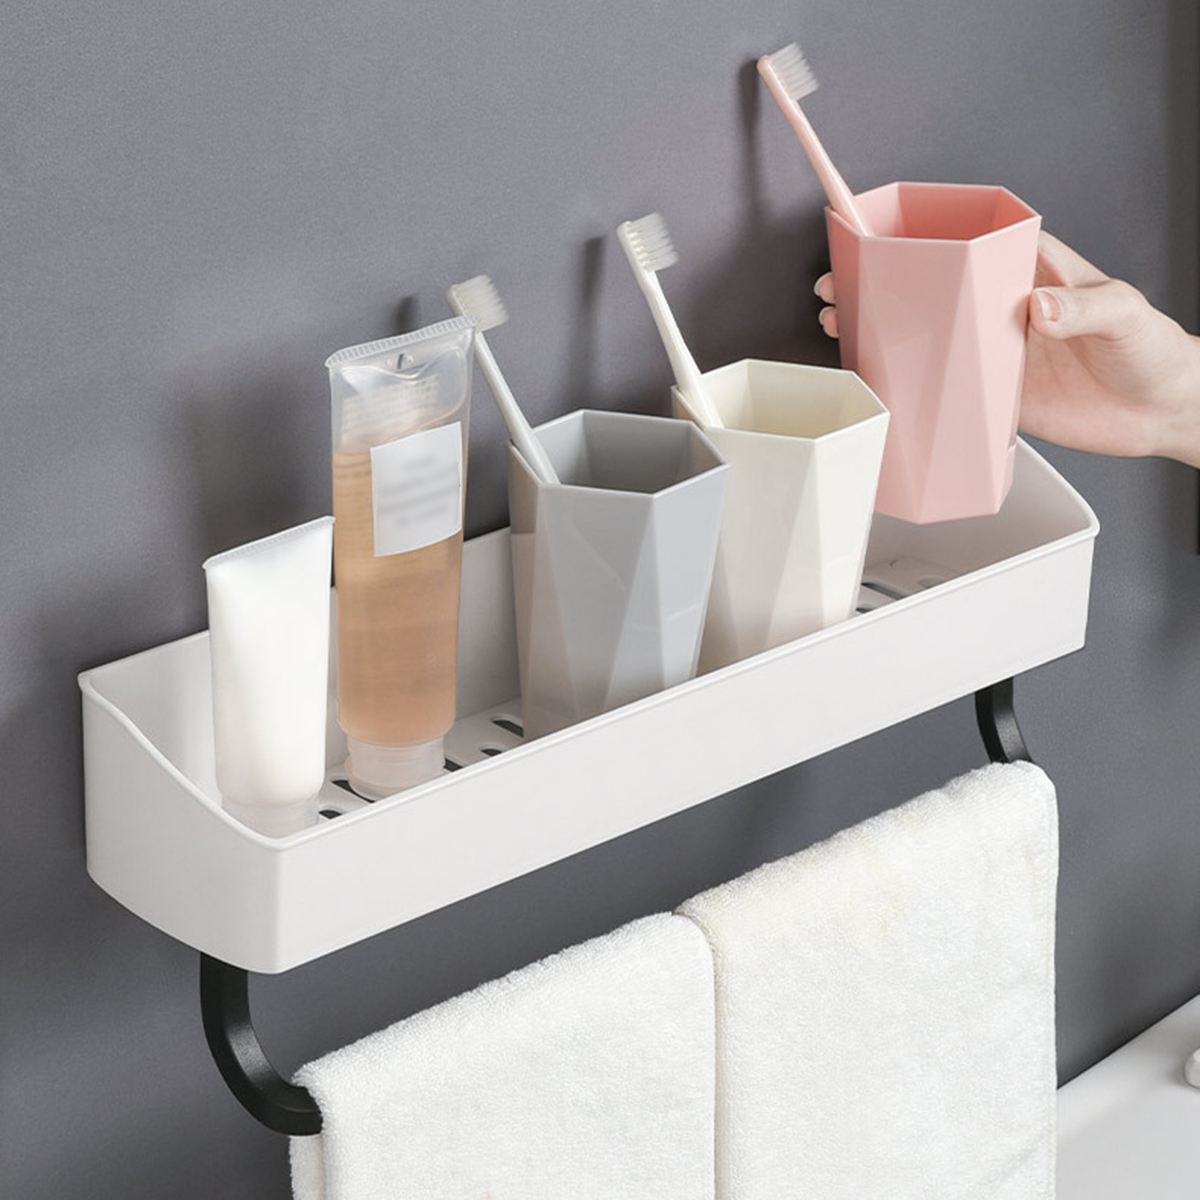 Bathroom-Wall-Mounted-Kitchen-Storage-Rack-Towel-Shelf-Organizer-Shower-Shampoo-Holder-1663521-5